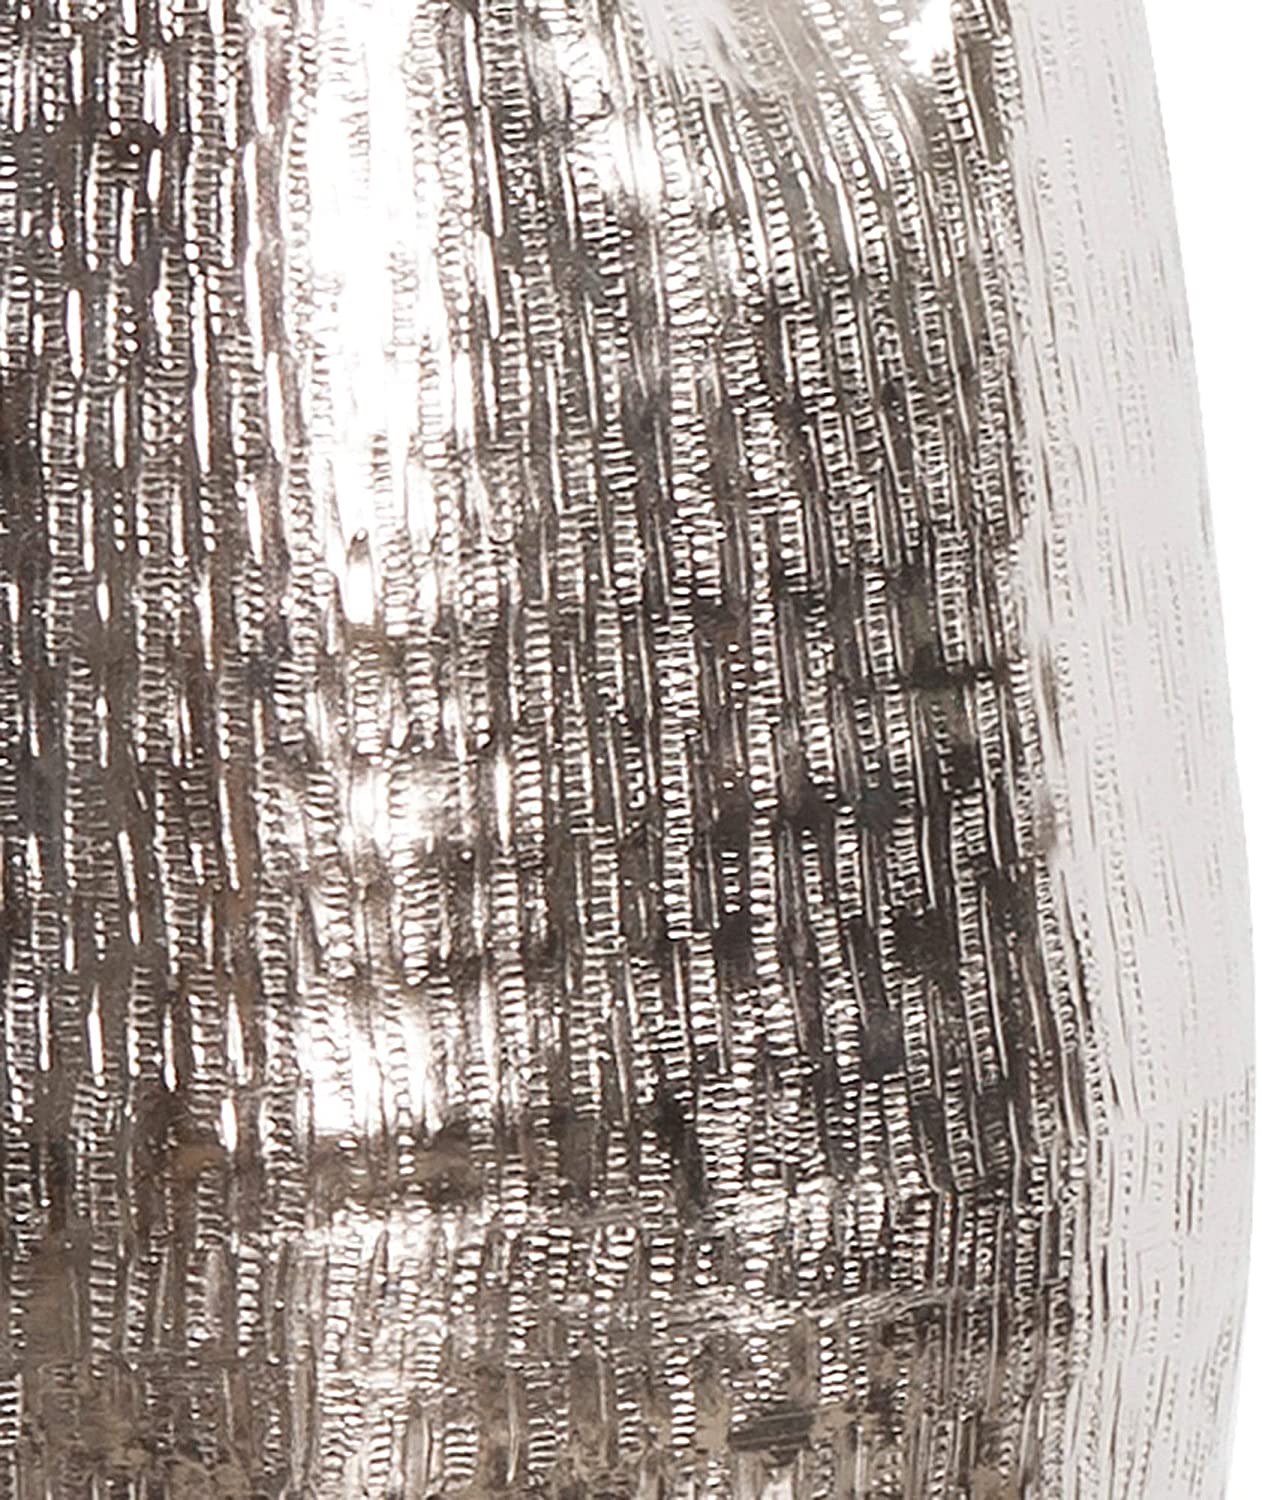 MISC Textured Bright Silver Aluminum Pinch Pot Votive Holder Large 5h X 6w 6d